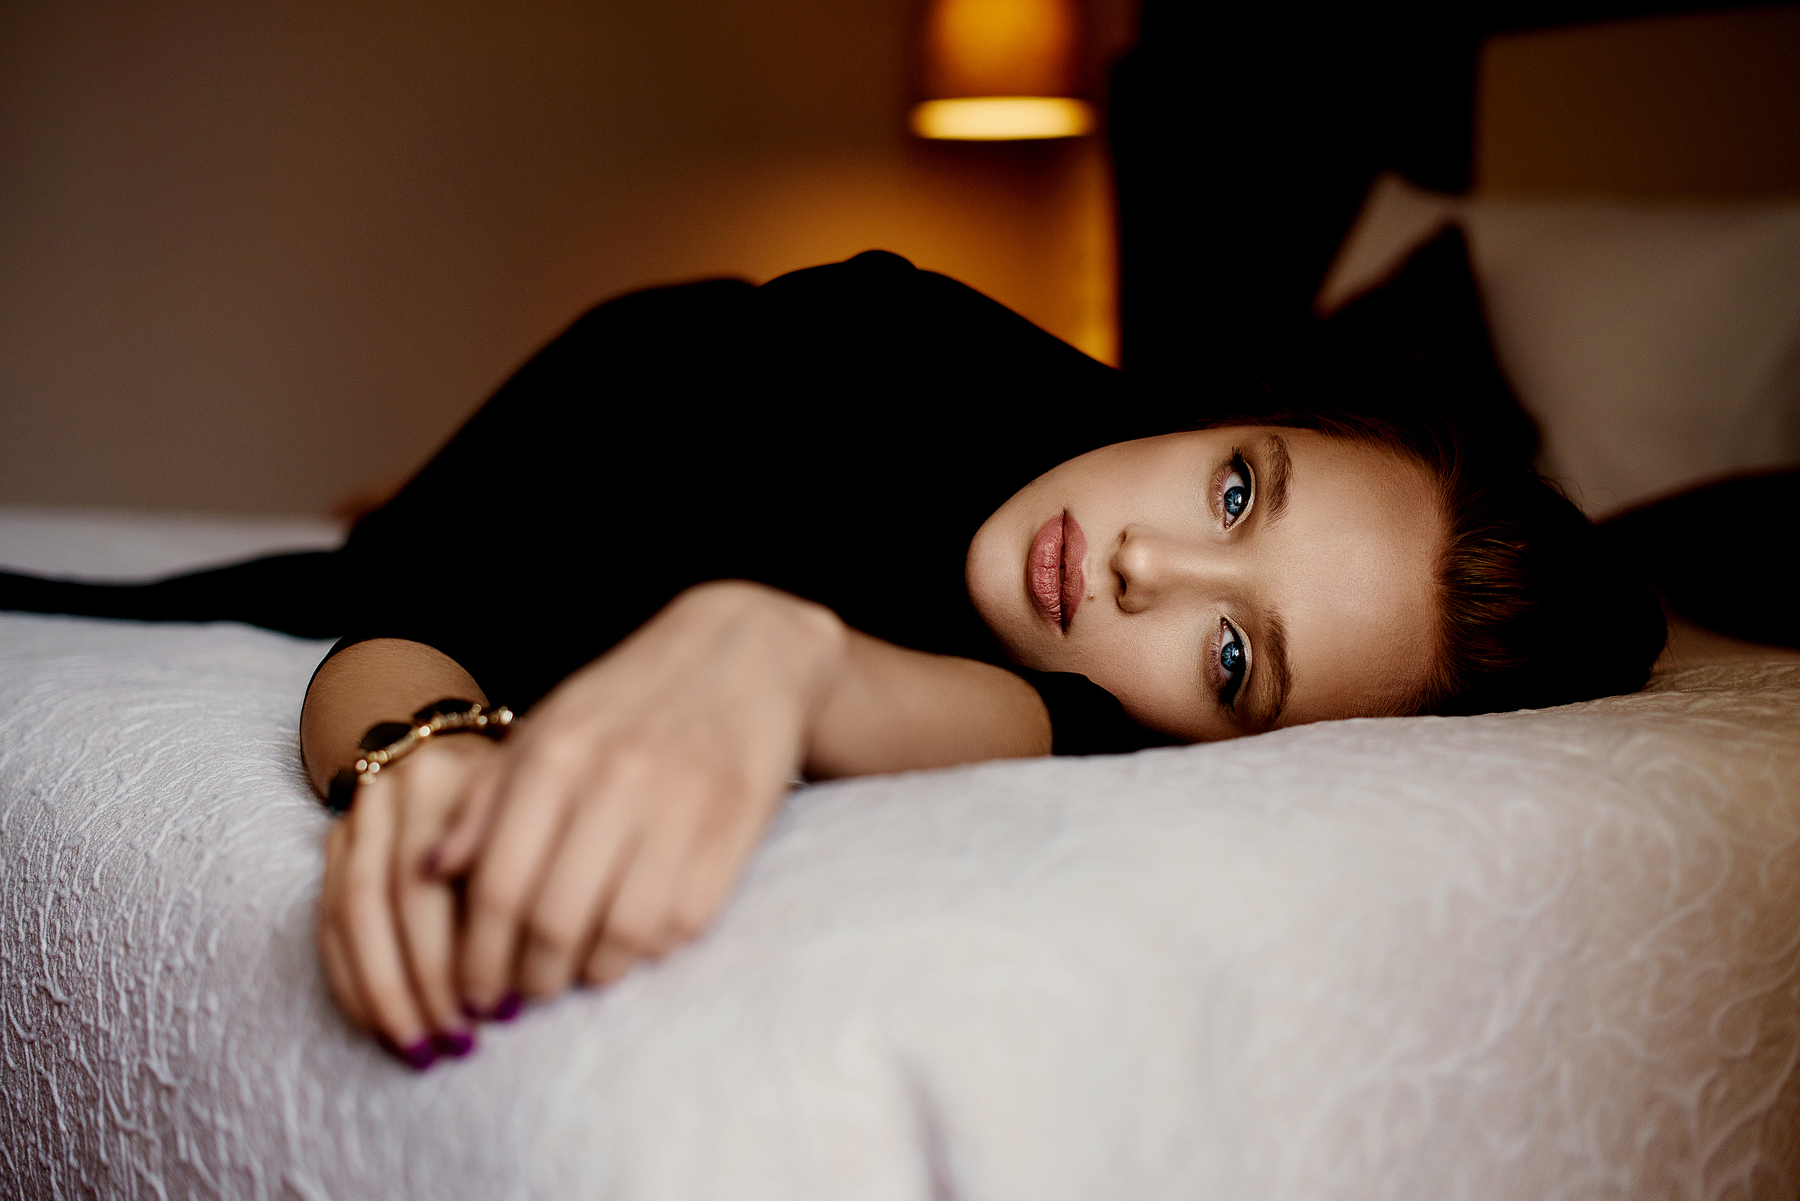 Women Model Brunette Long Hair In Bed Blue Eyes Black Clothing Depth Of Field Looking At Viewer Hand 1800x1201